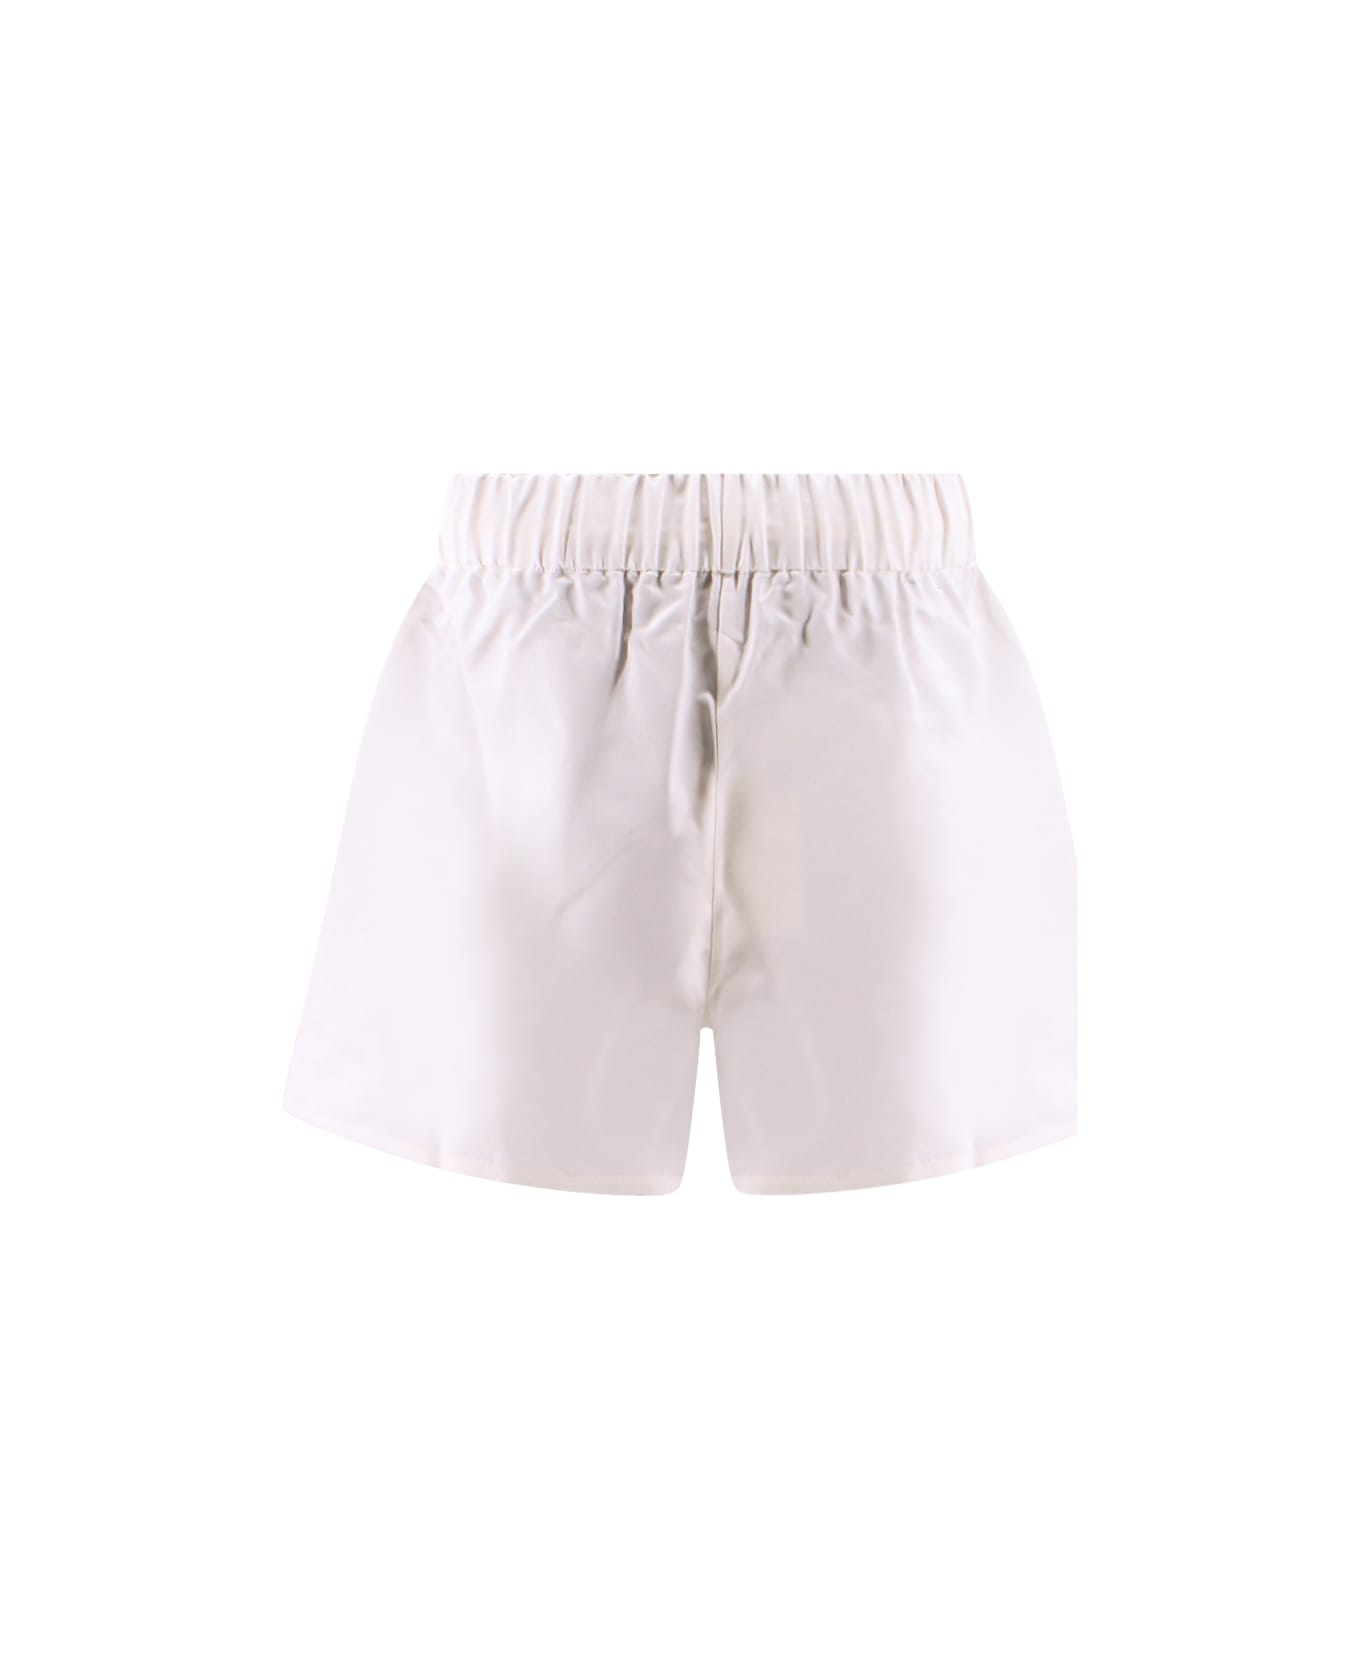 Sa Su Phi Shorts - White